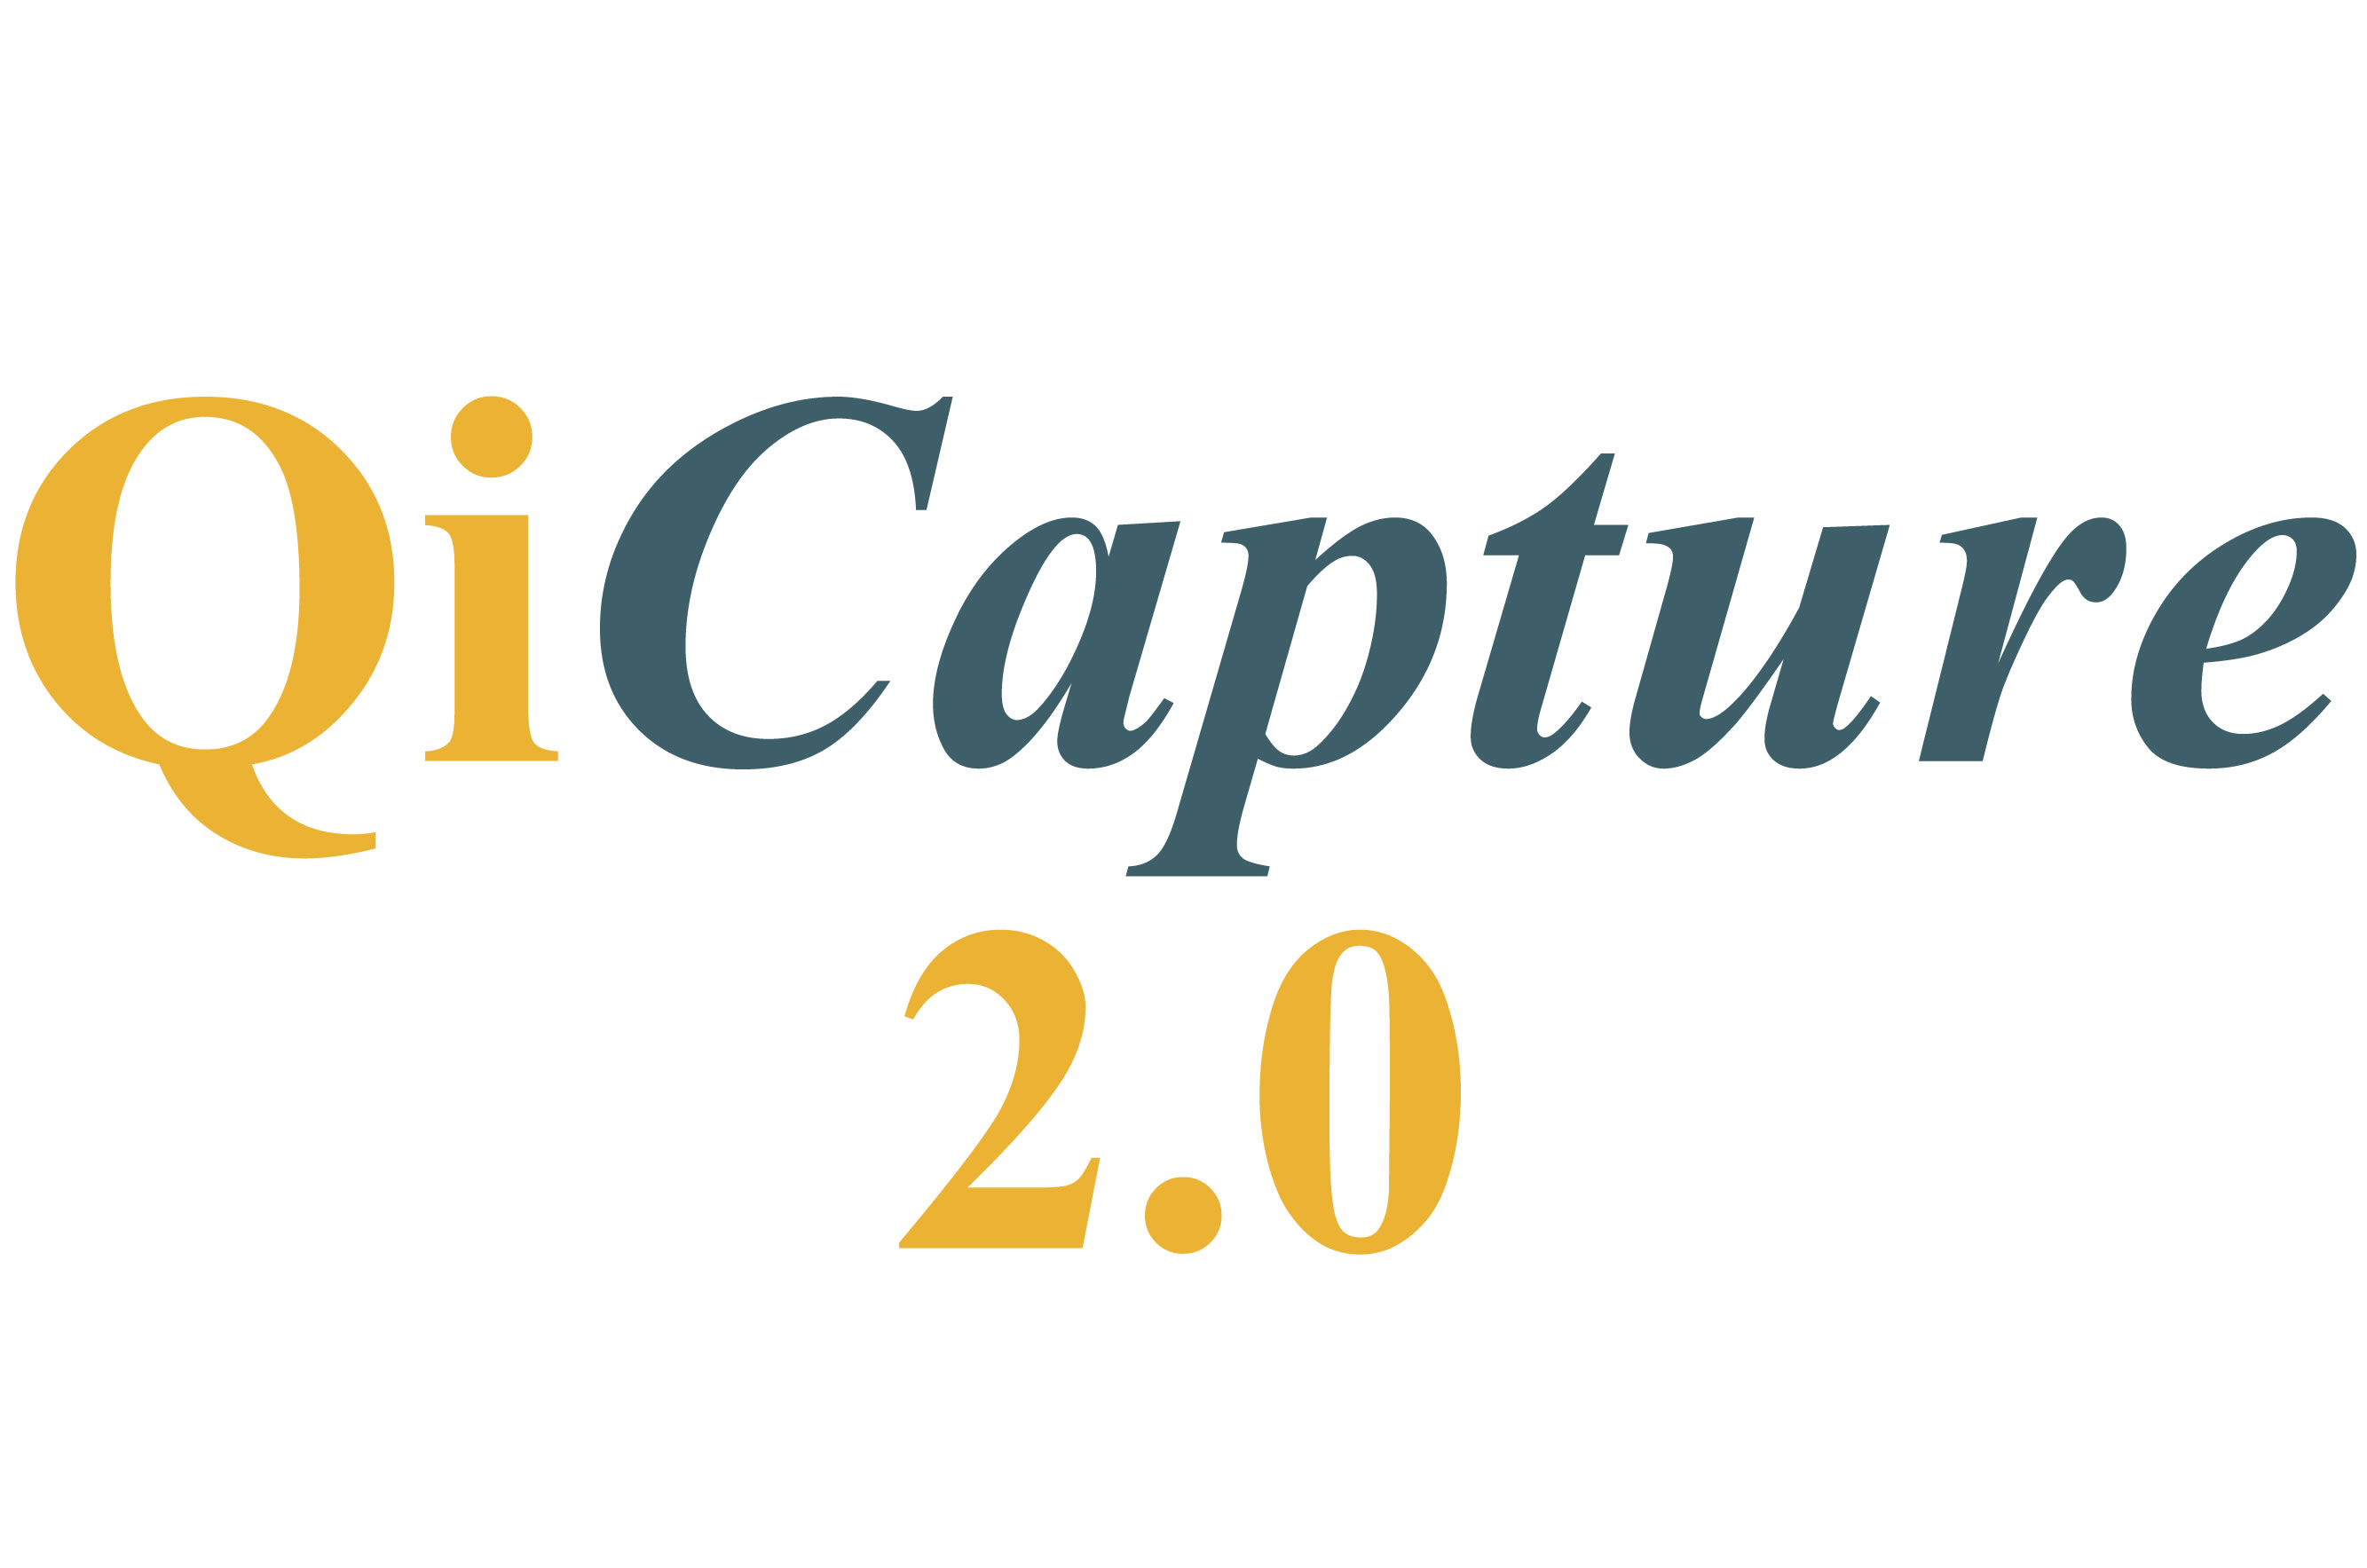 QiCapture 2.0 - Capture Software for Qidenus Book Scanners - iGuana